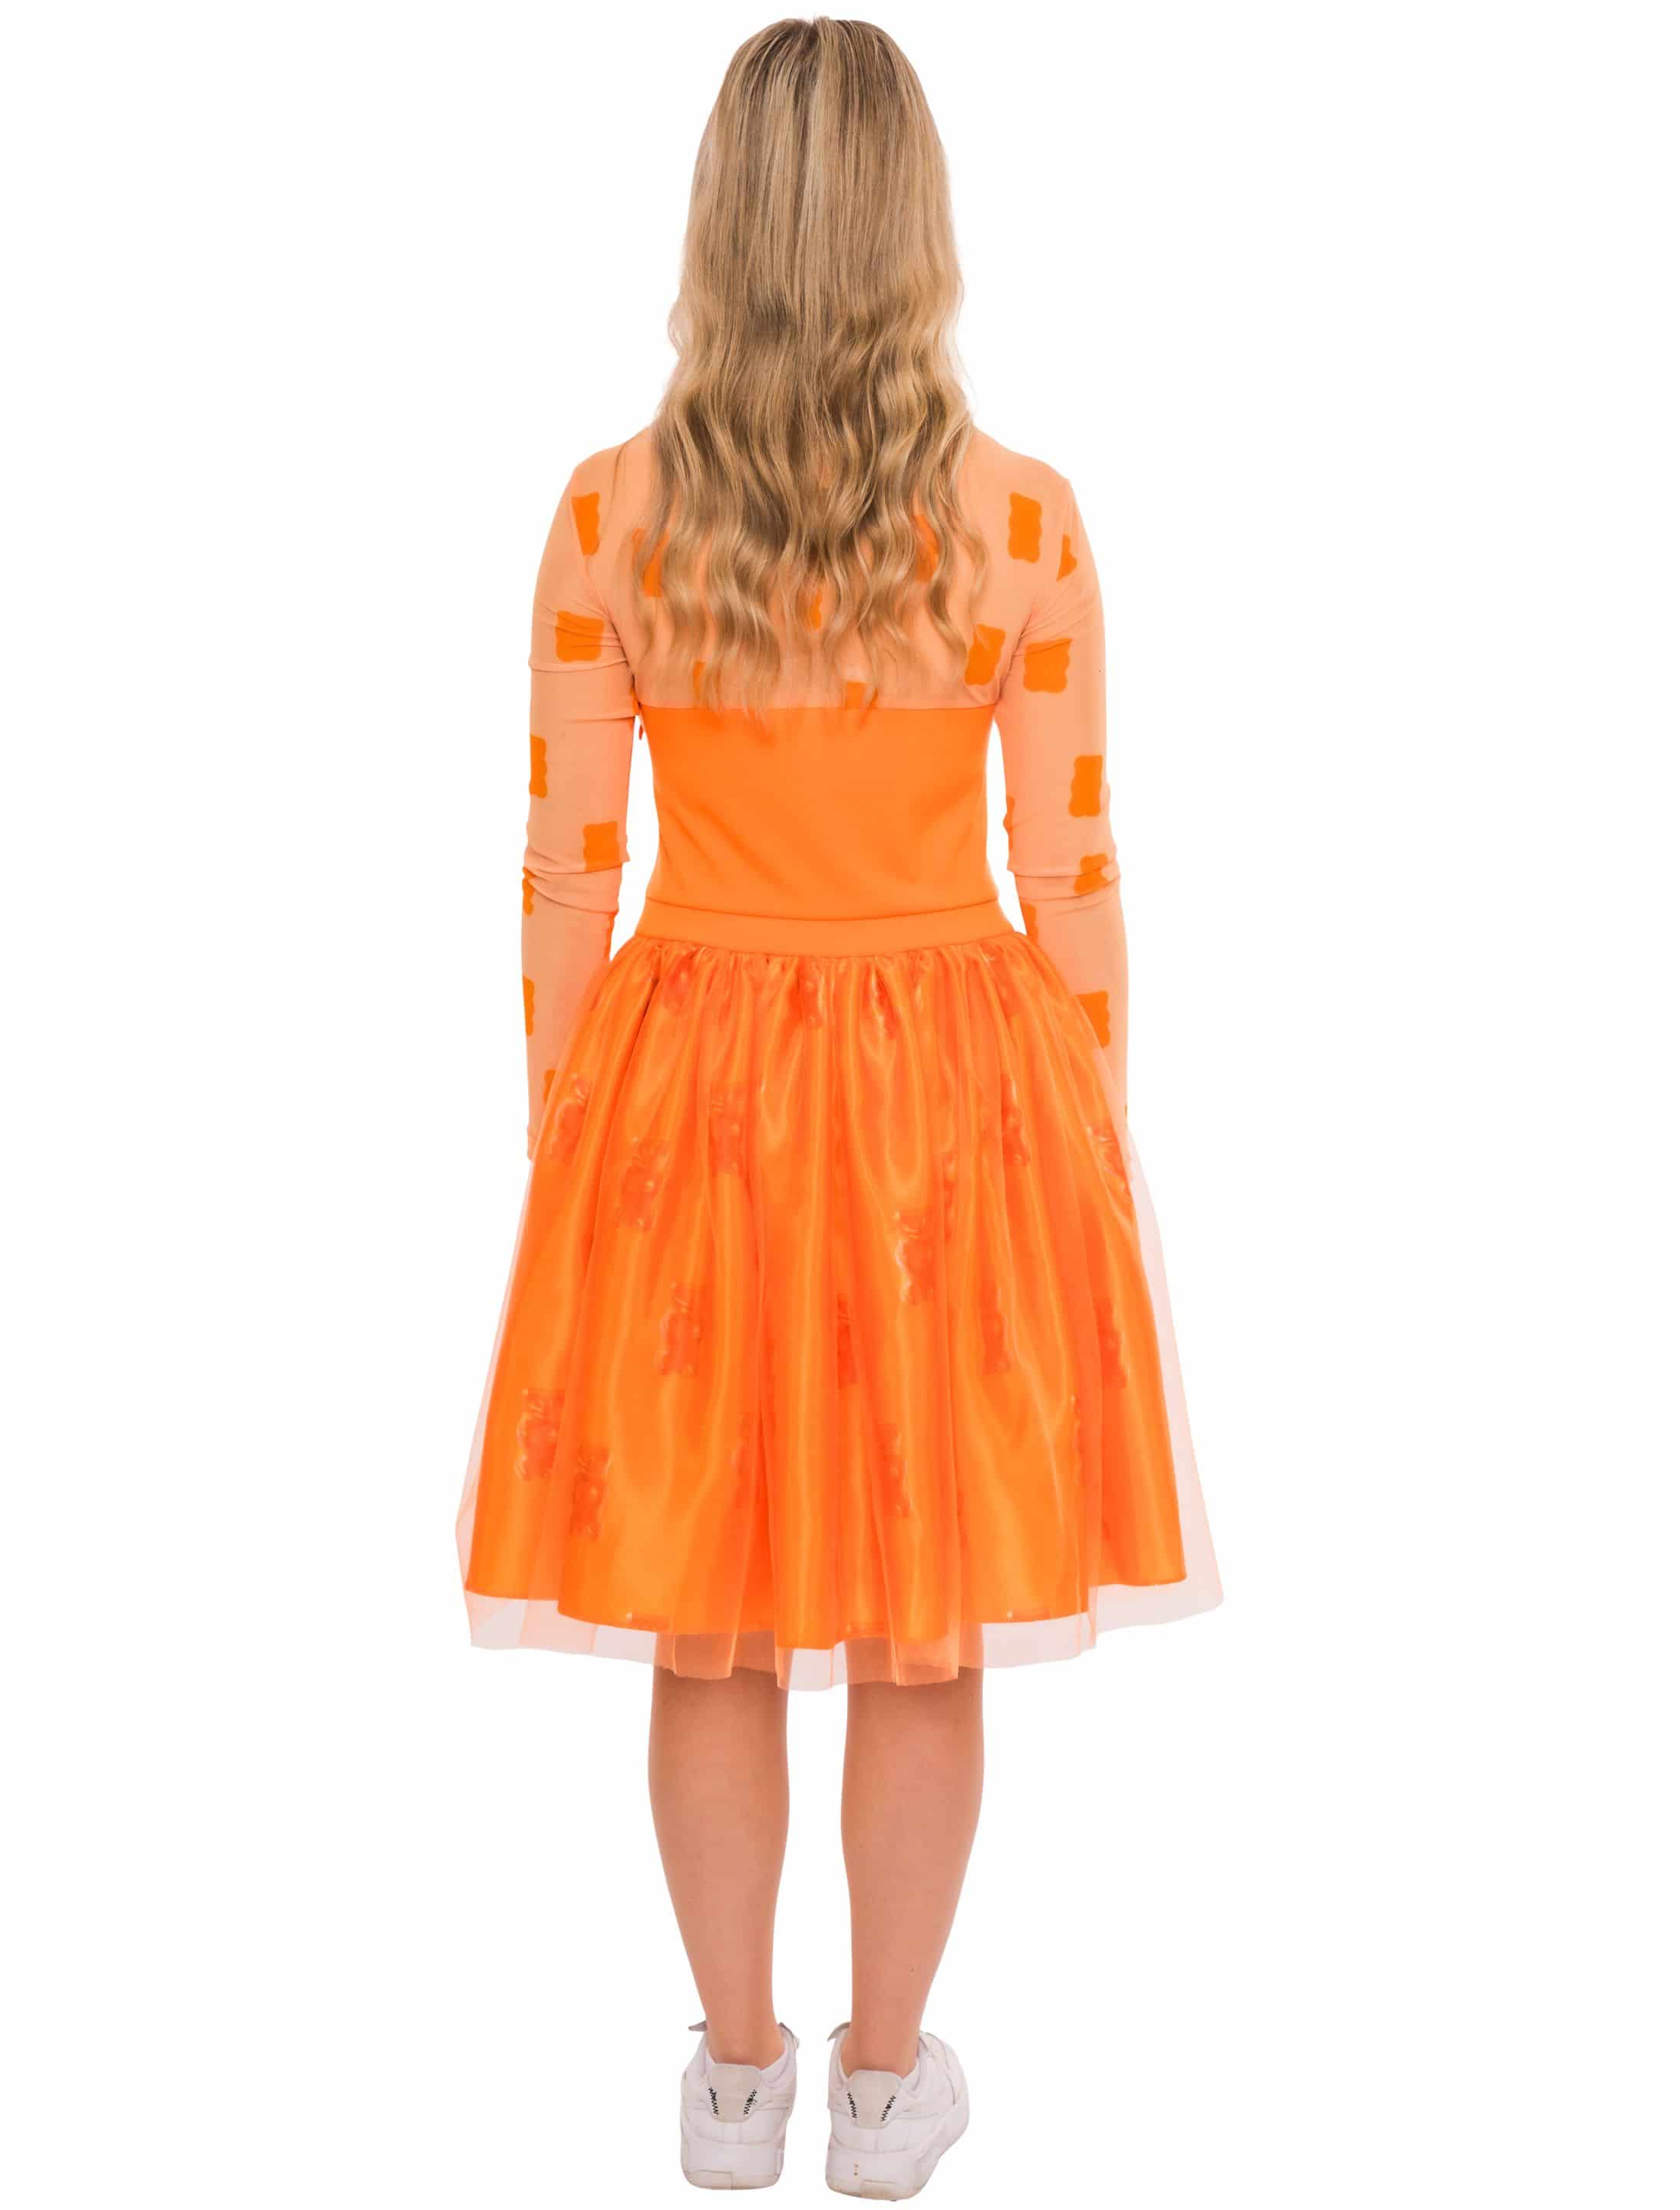 Kleid HARIBO Goldbären Damen orange XL